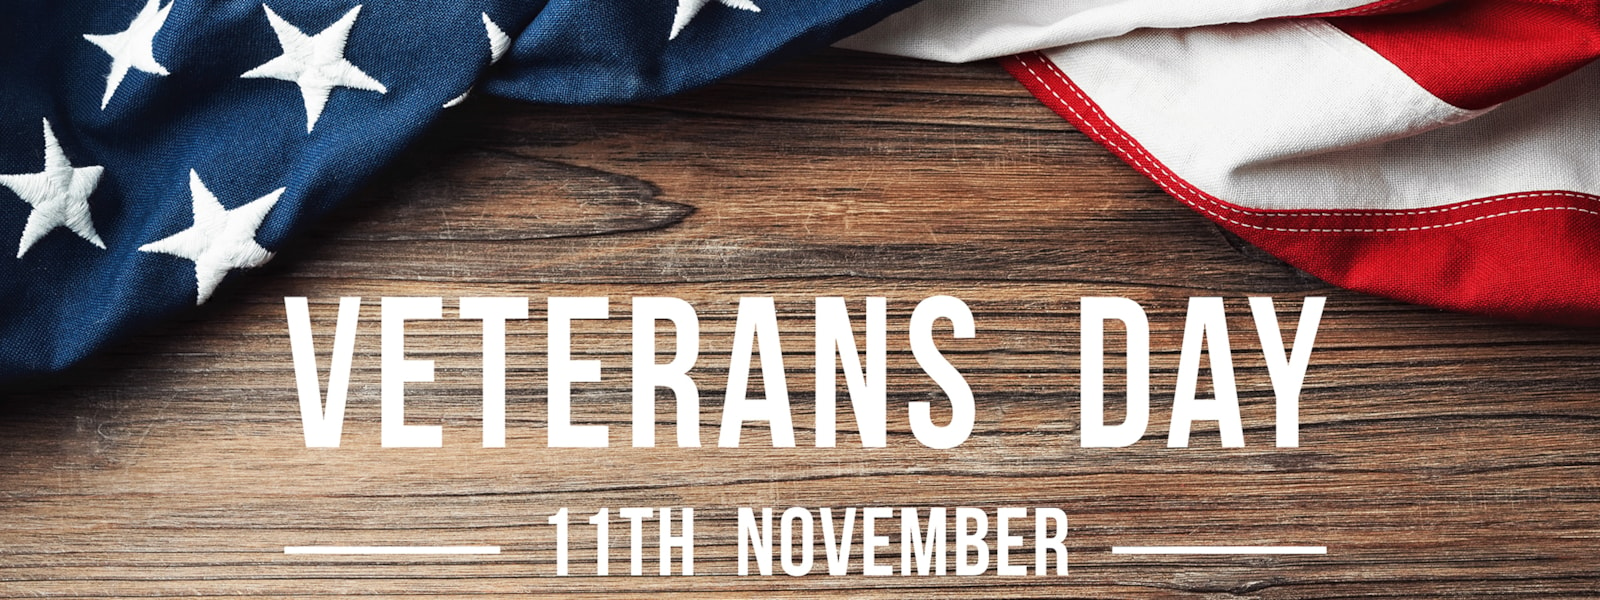 Veterans Day 11 November 